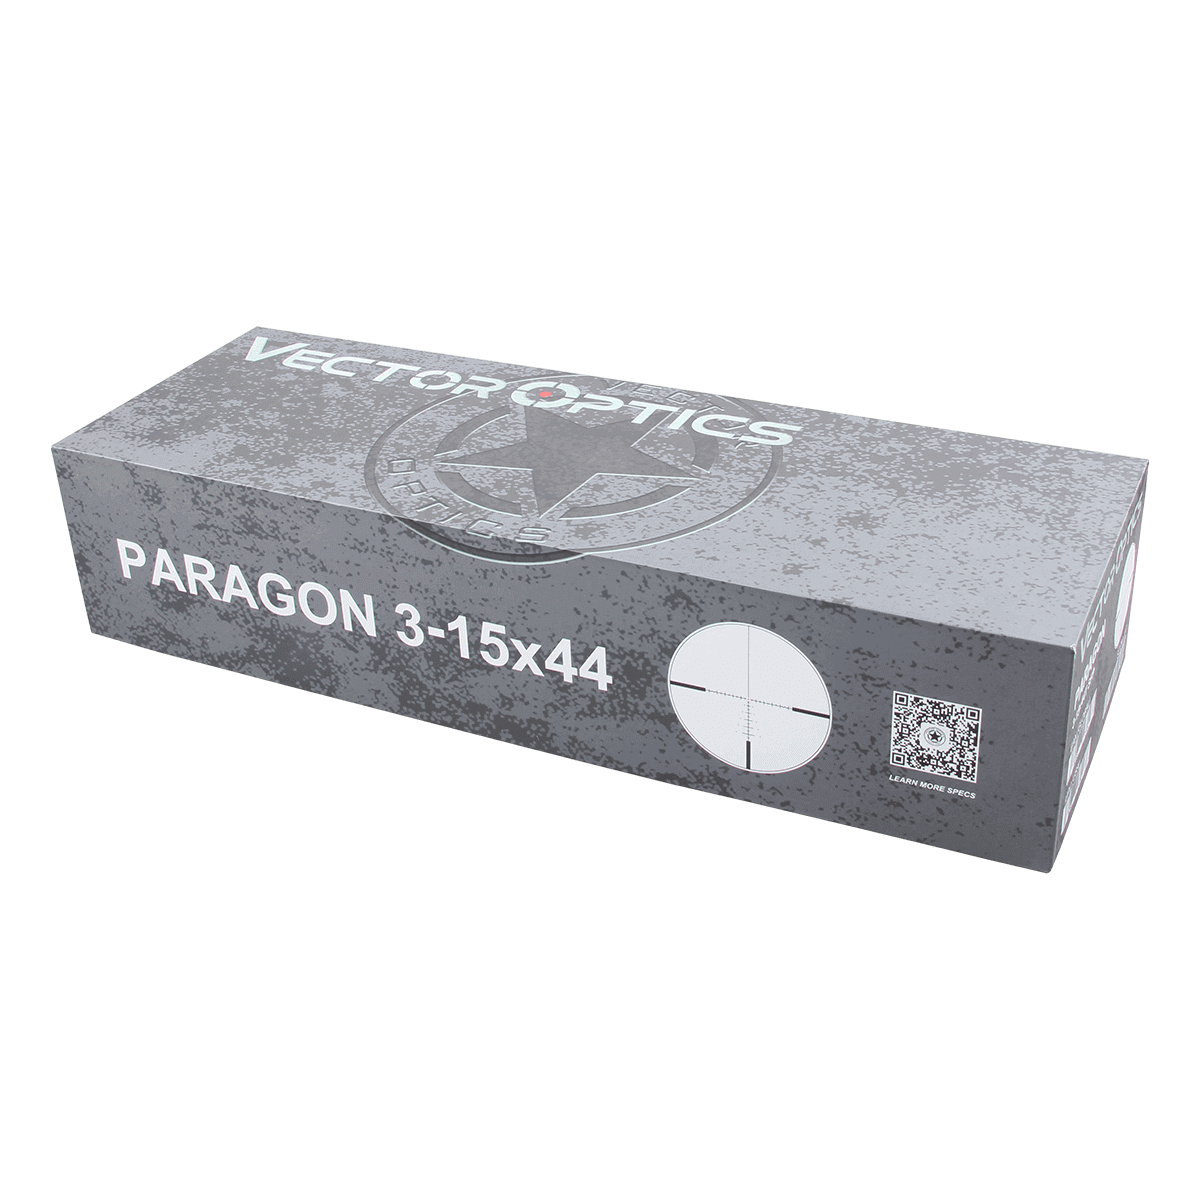 Paragon 3-15x44 1in Riflescope Zero-Stop